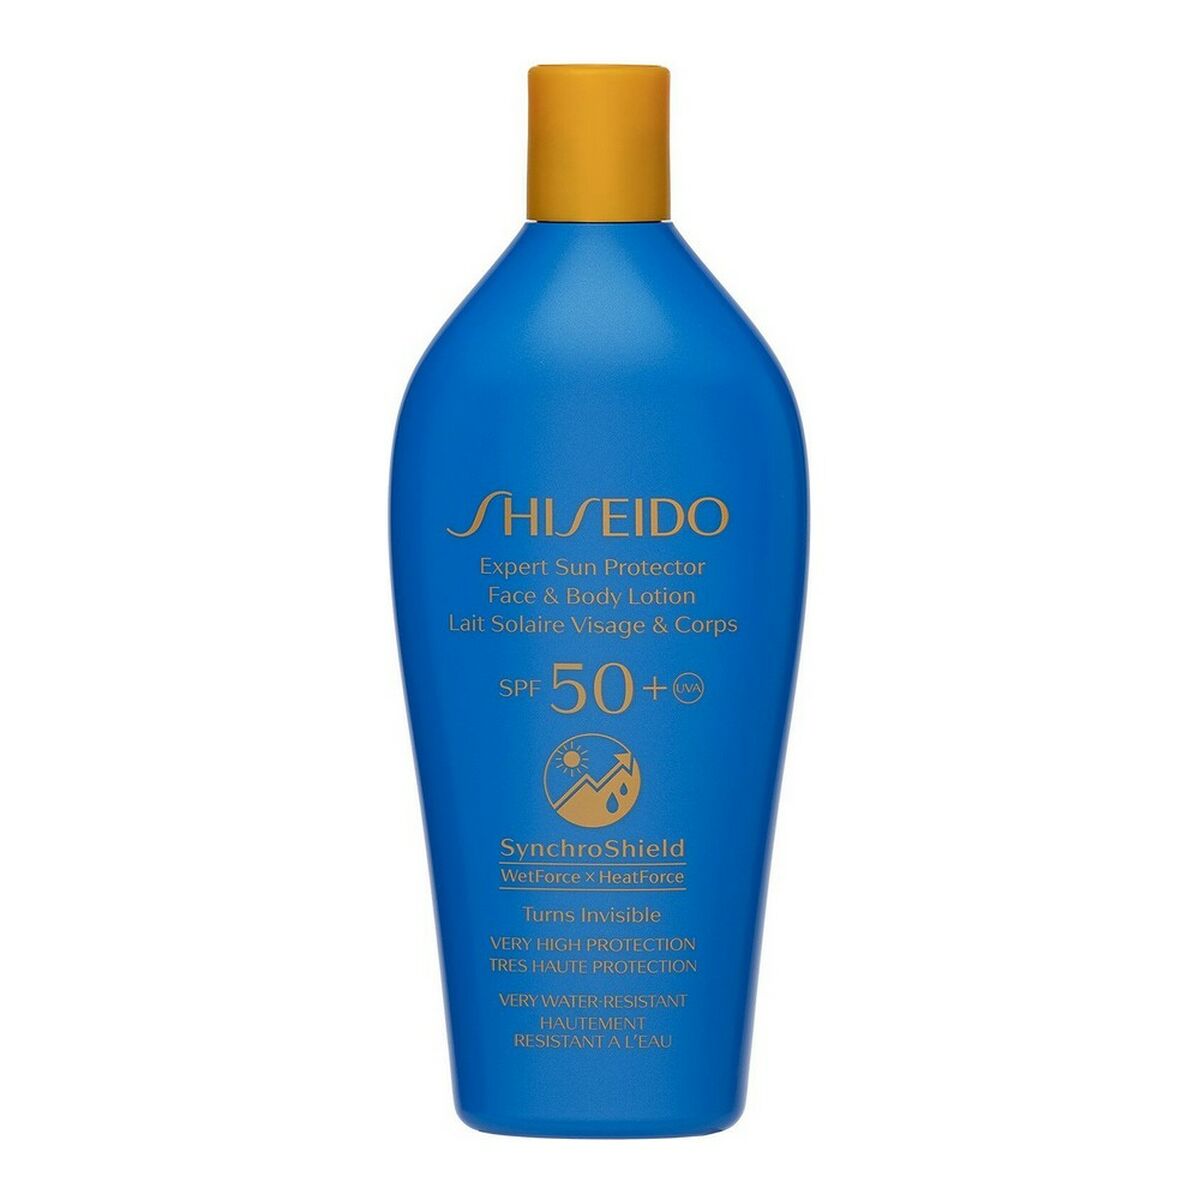 Sun Lotion Expert Sun Protector Shiseido Spf 50+ (300 ml)-0